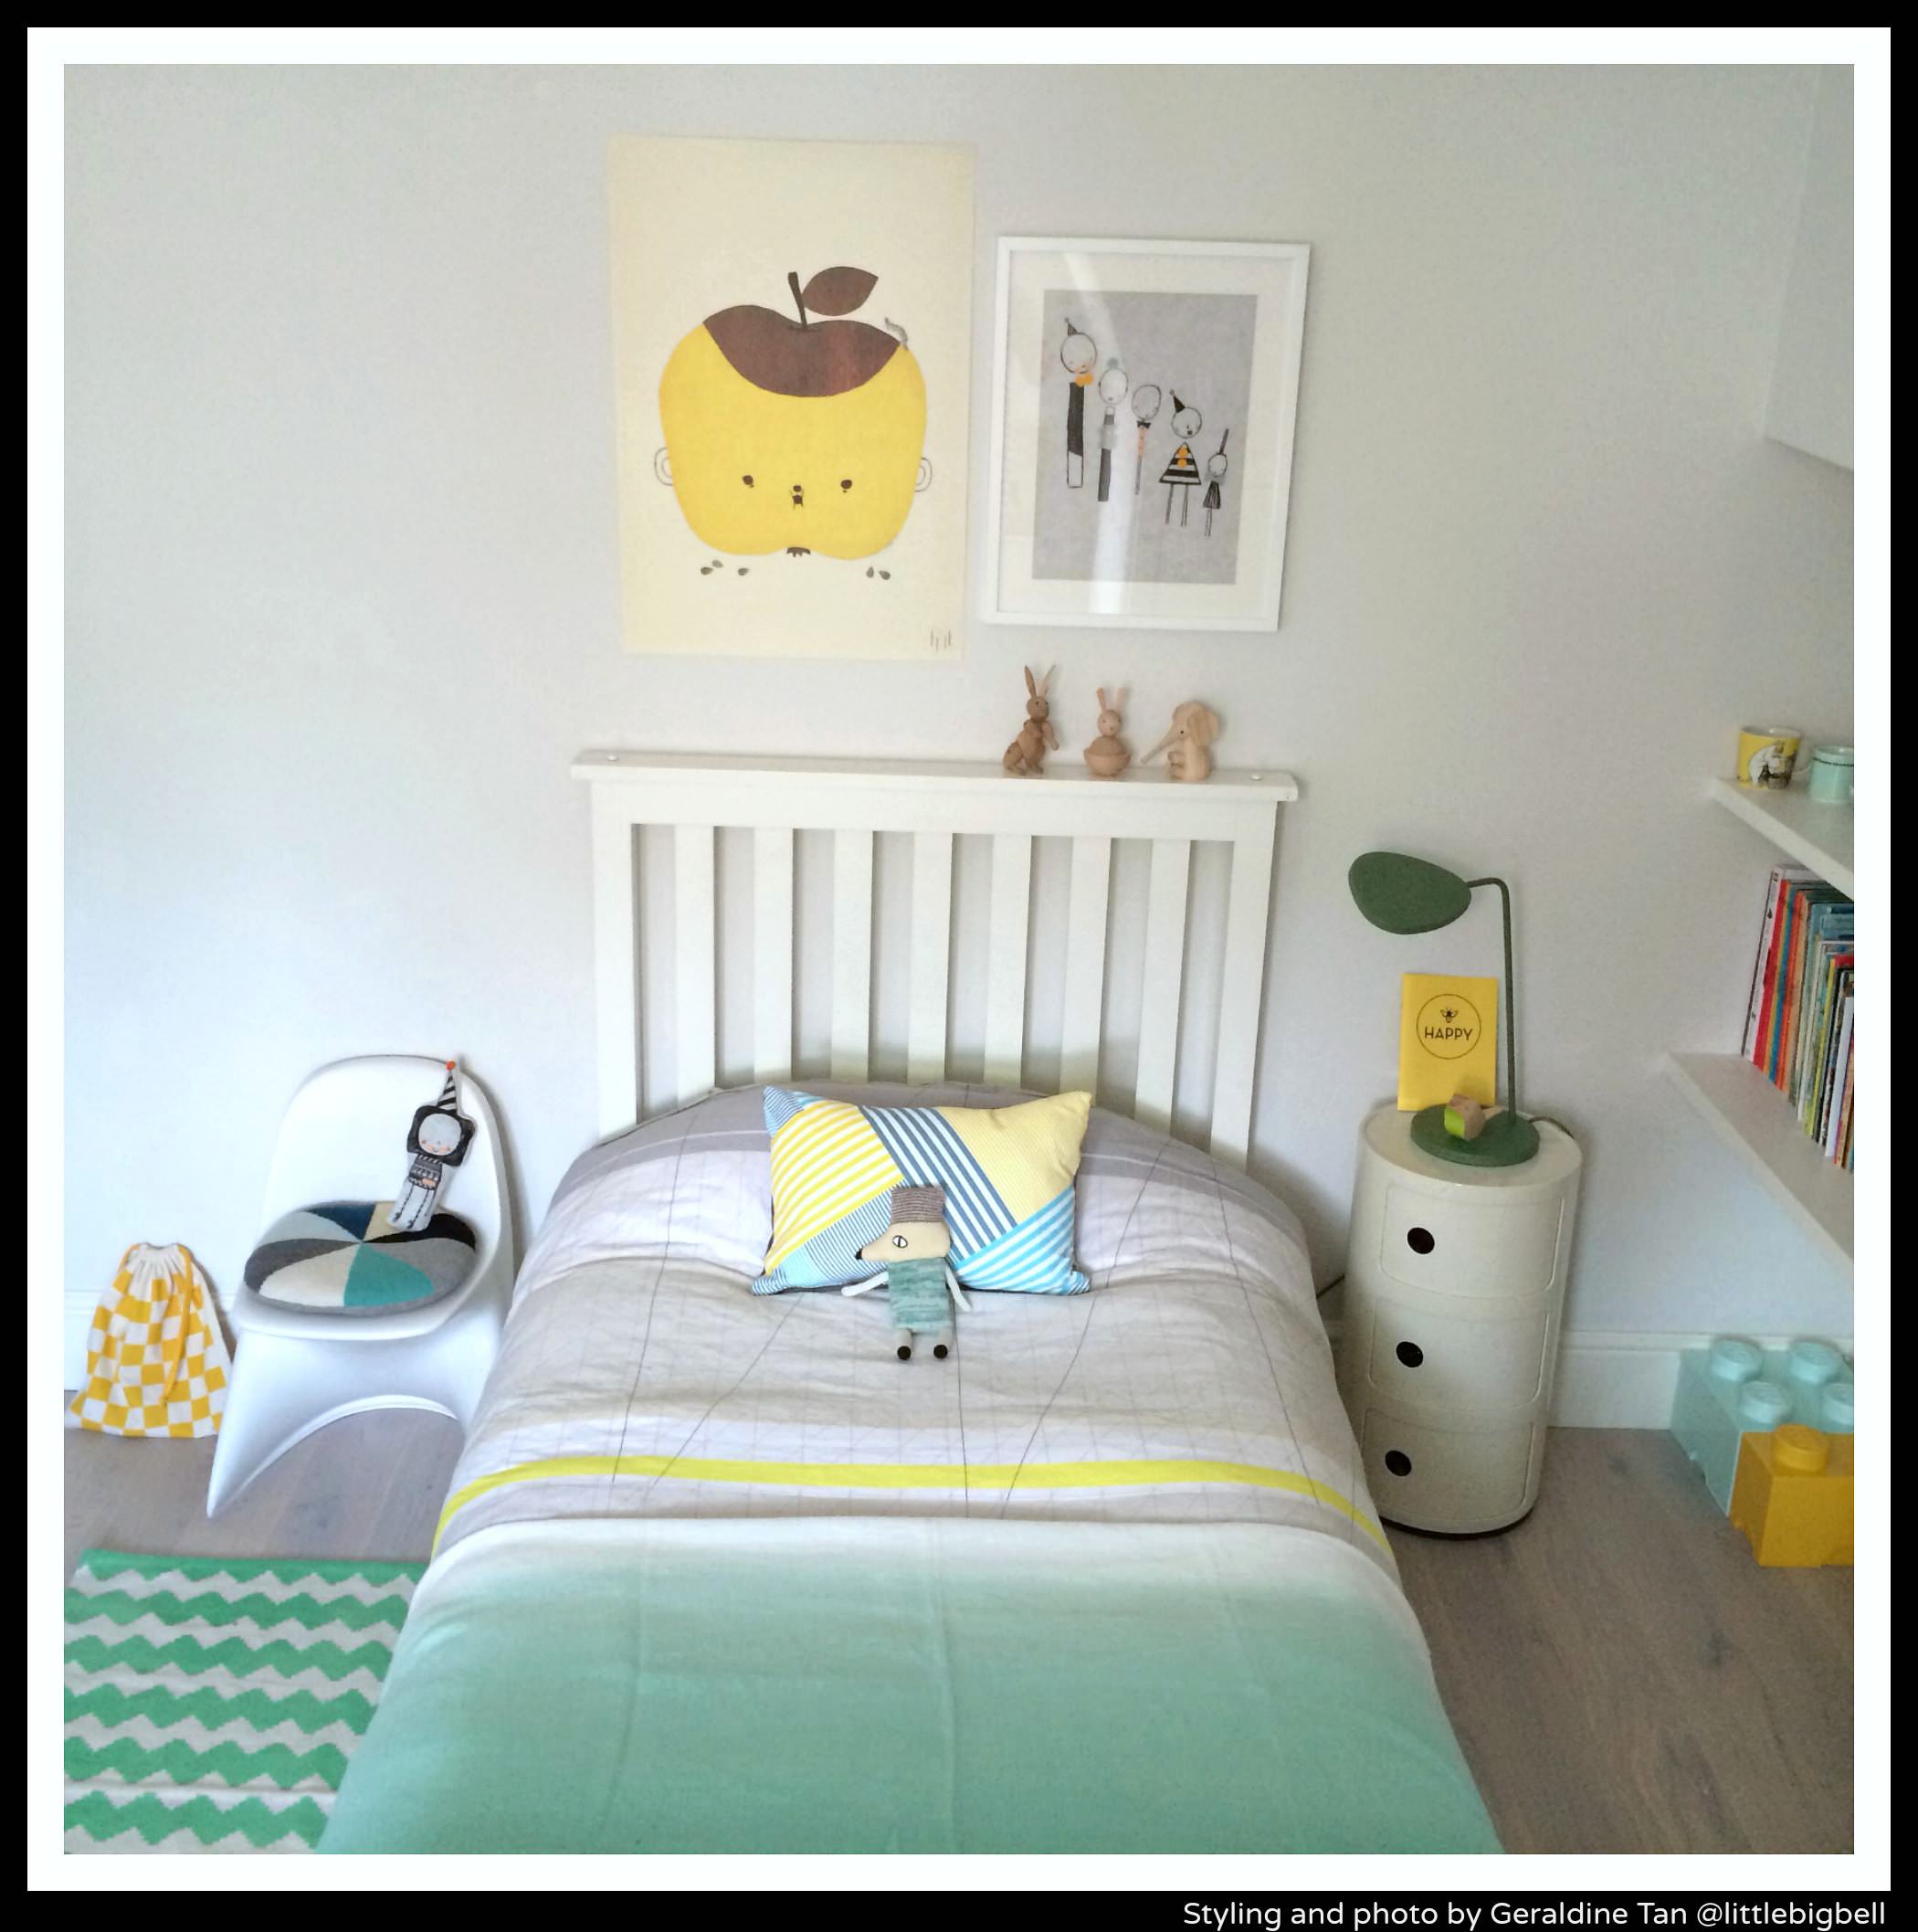 Stylish-boy's-room-styling-and-photo-by-geraldine-tan-@littlebigbell.jpg.jpg